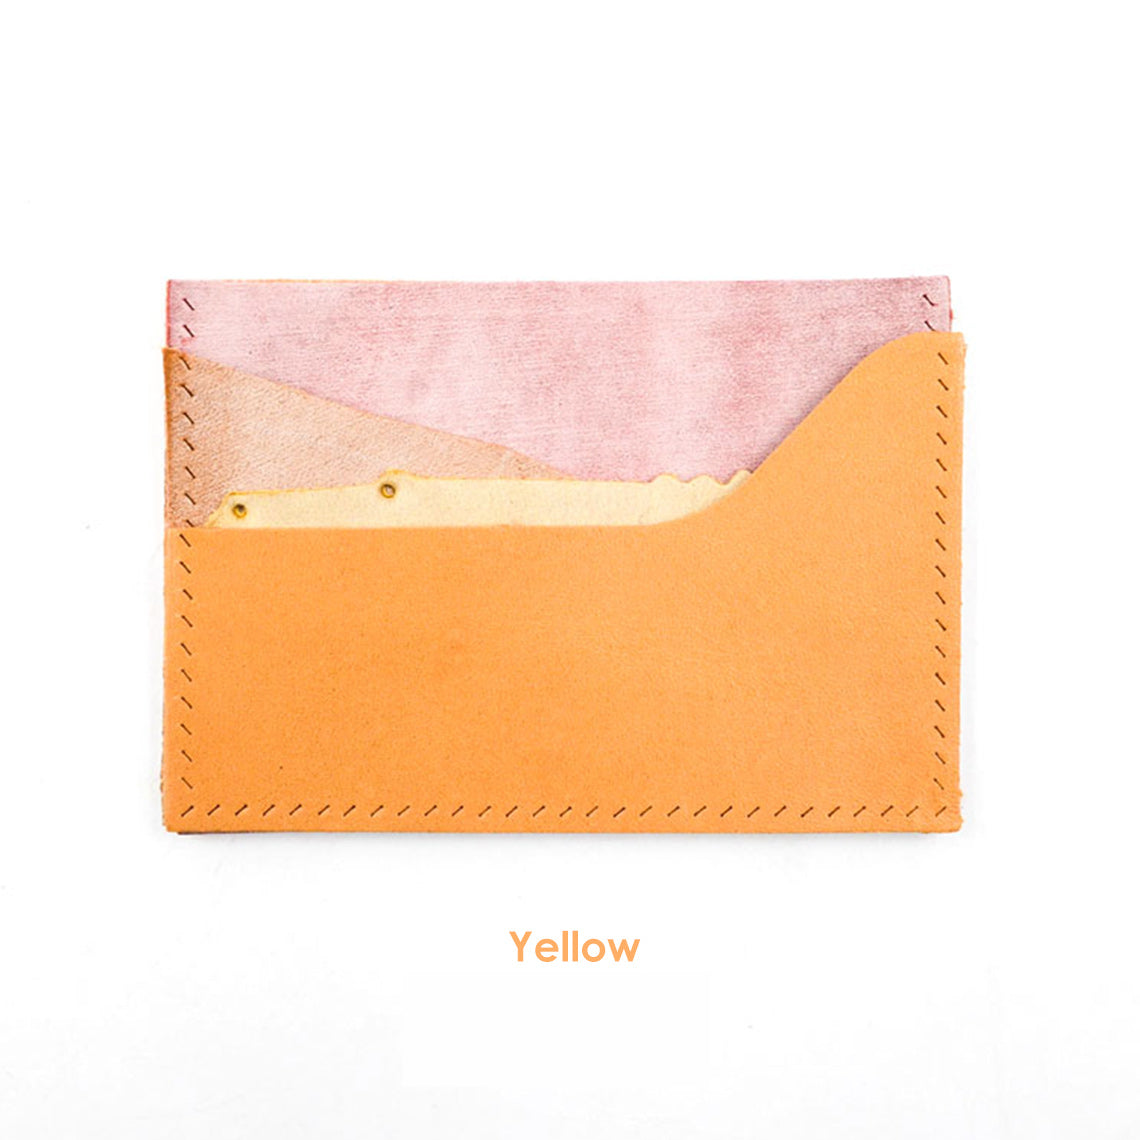 Easy DIY card holder wallet pattern making kit | How to make a slim wallet/card holder in leather | DIY leathercraft kit